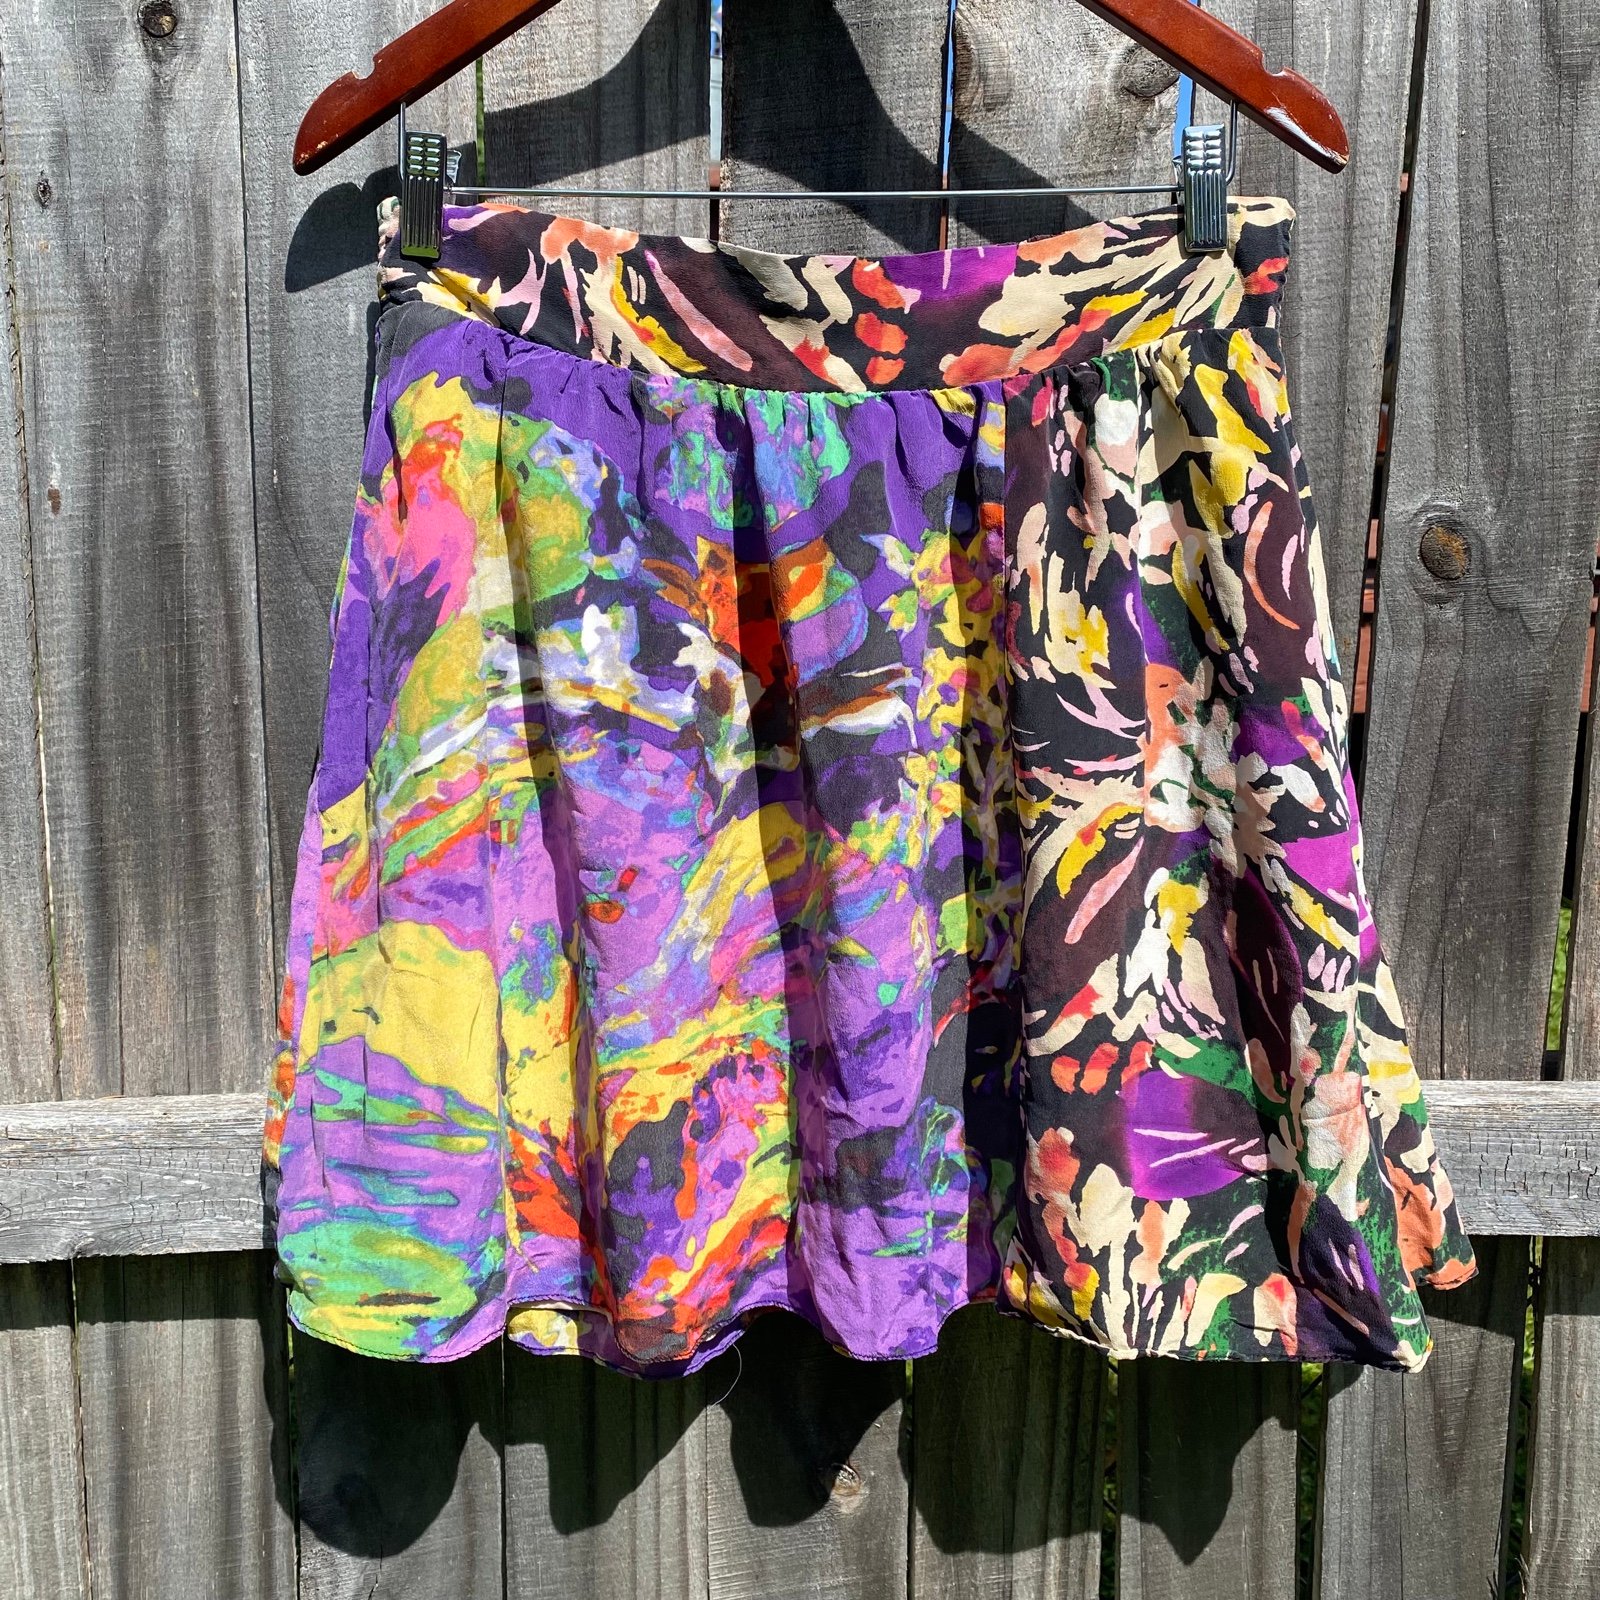 The Best Seller Anthropologie Maeve Multi Color Jewel Tone Silk Mini Skirt size Medium hDOQz6WK3 best sale